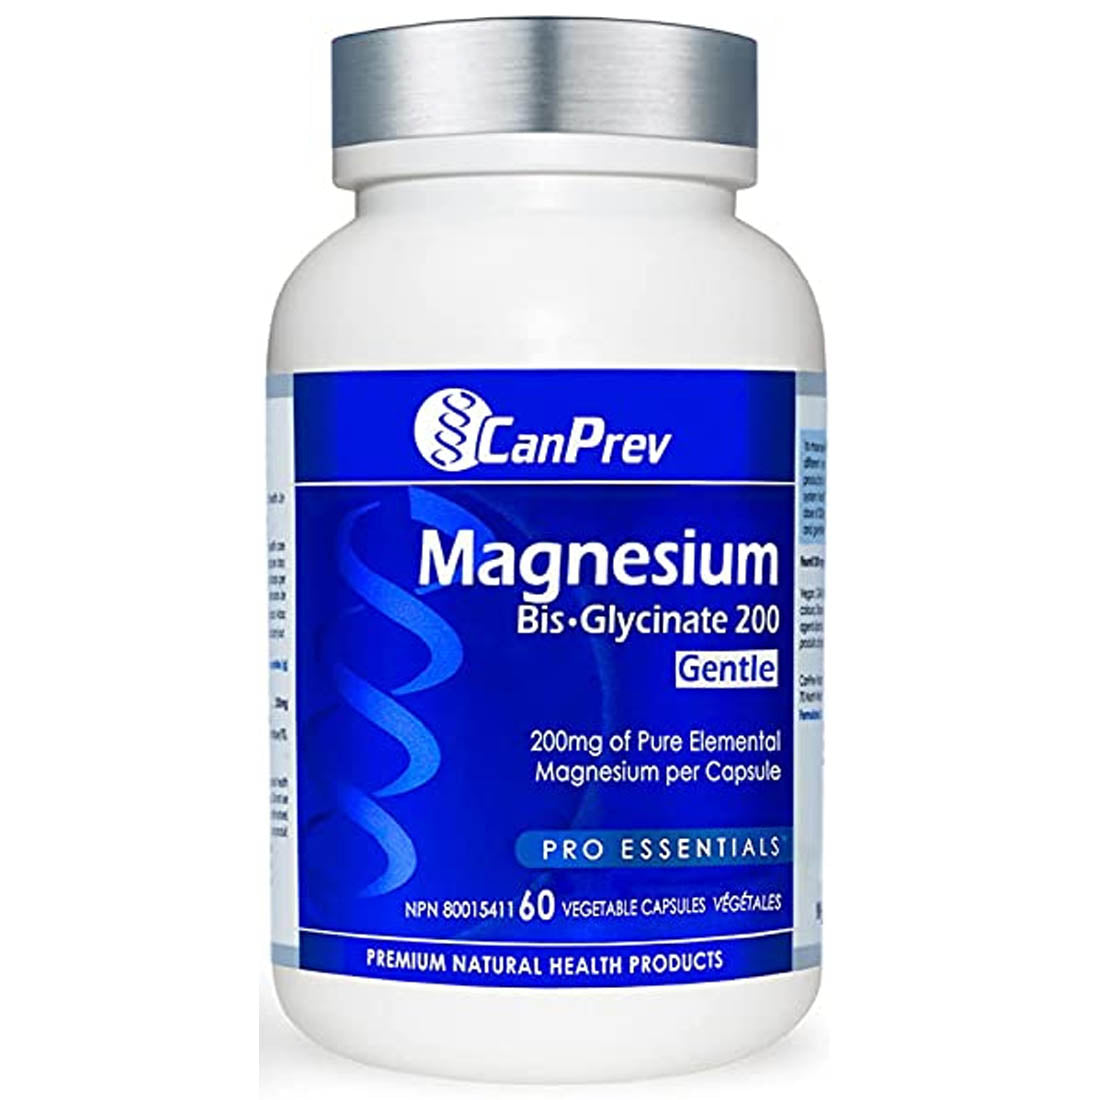 CanPrev Magnesium Bisglycinate 200 Gentle